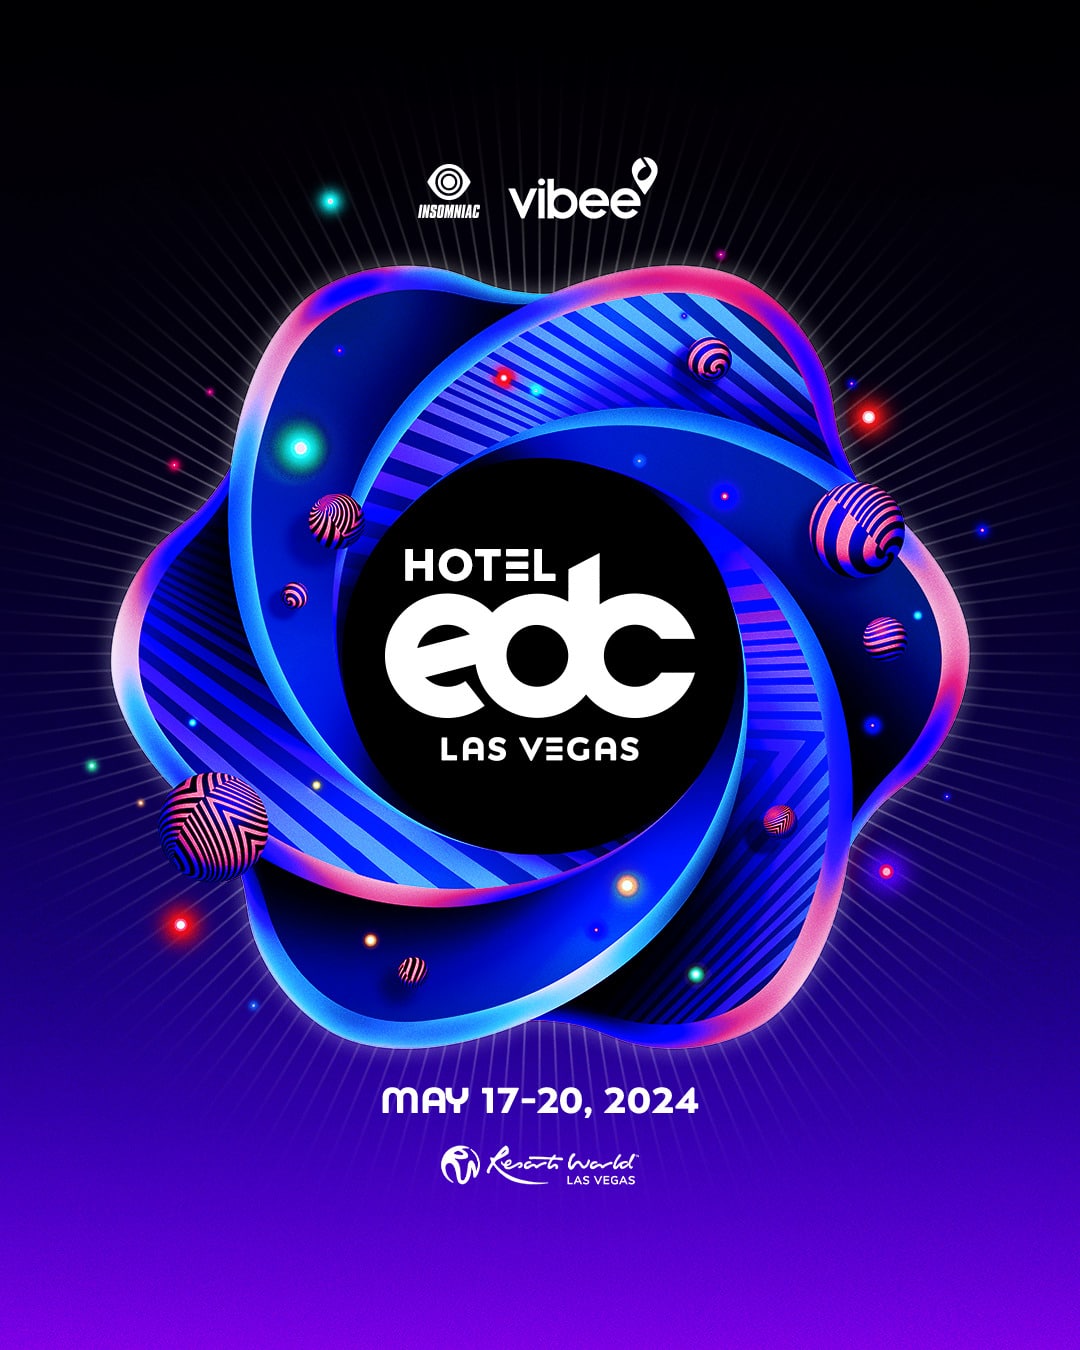 Insomniac and Vibee Announce Return of Hotel EDC EDM Identity